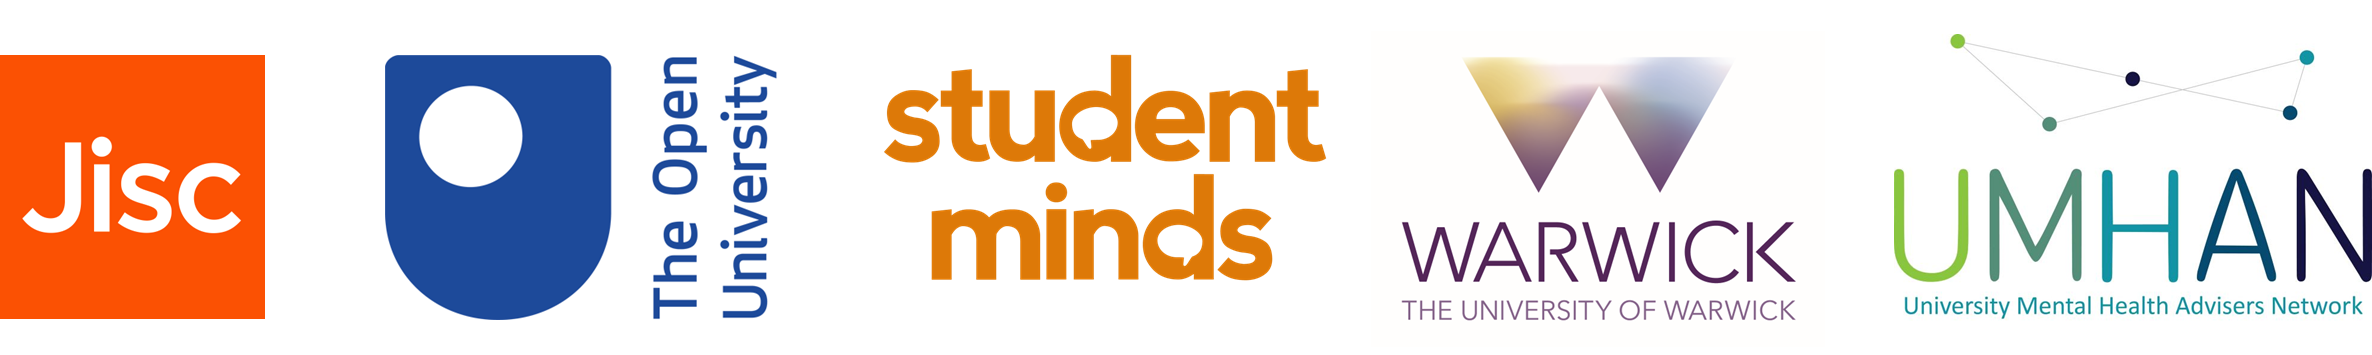 Student minds, Warwick University, Jisc, Open University, UMHAN